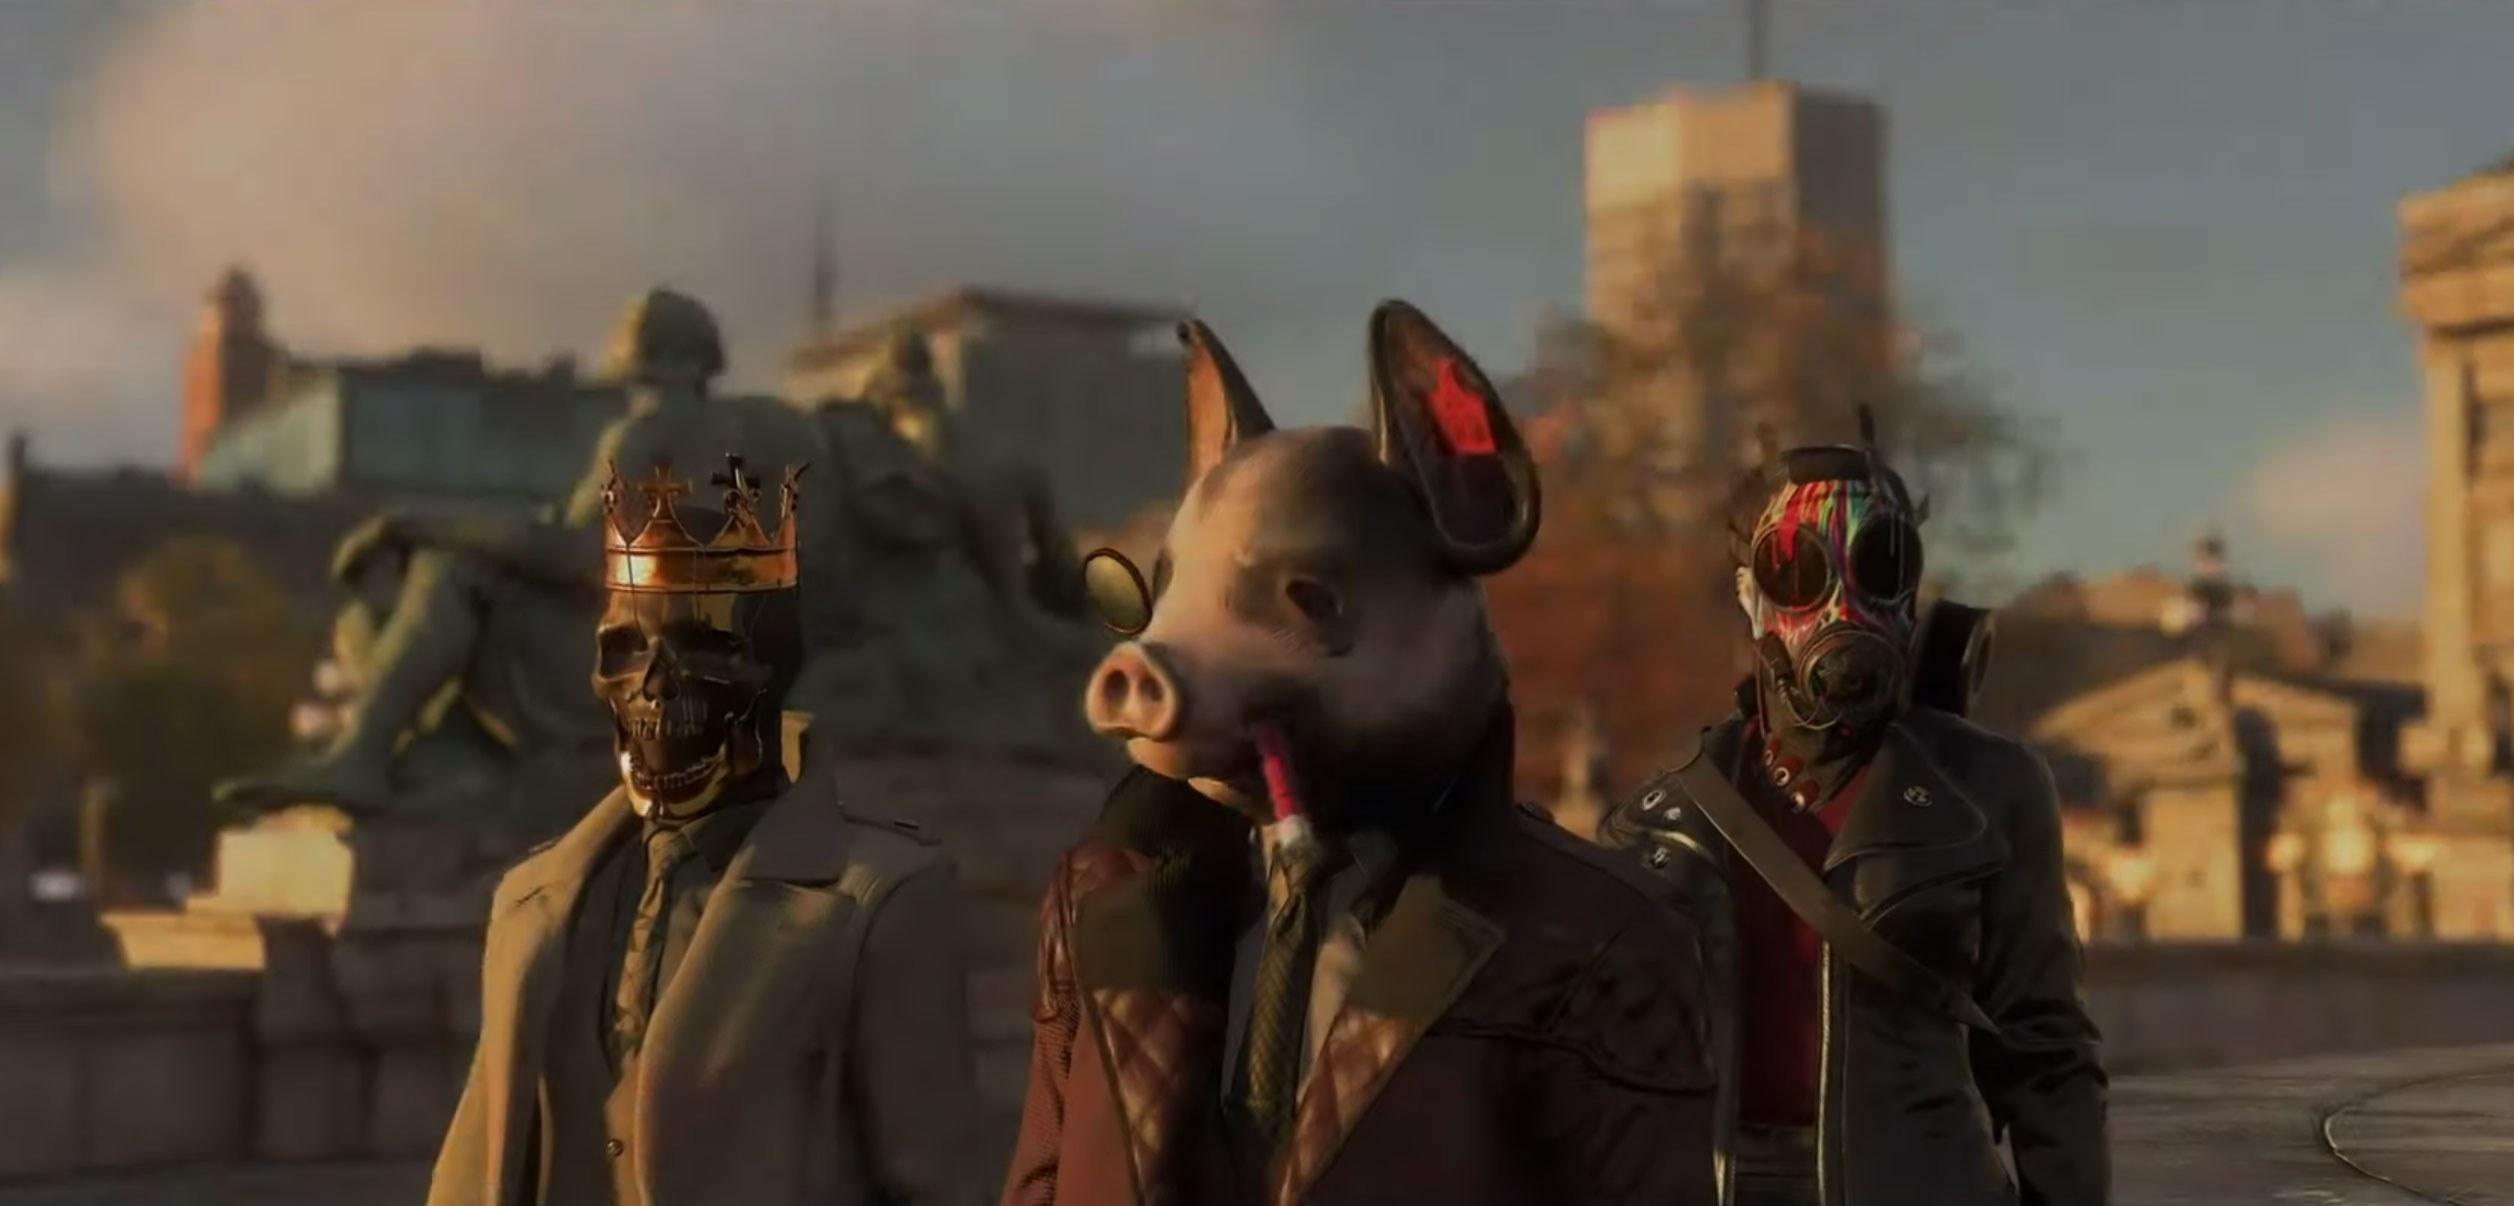 Watch Dogs: Legion: Gameplay Overview Trailer